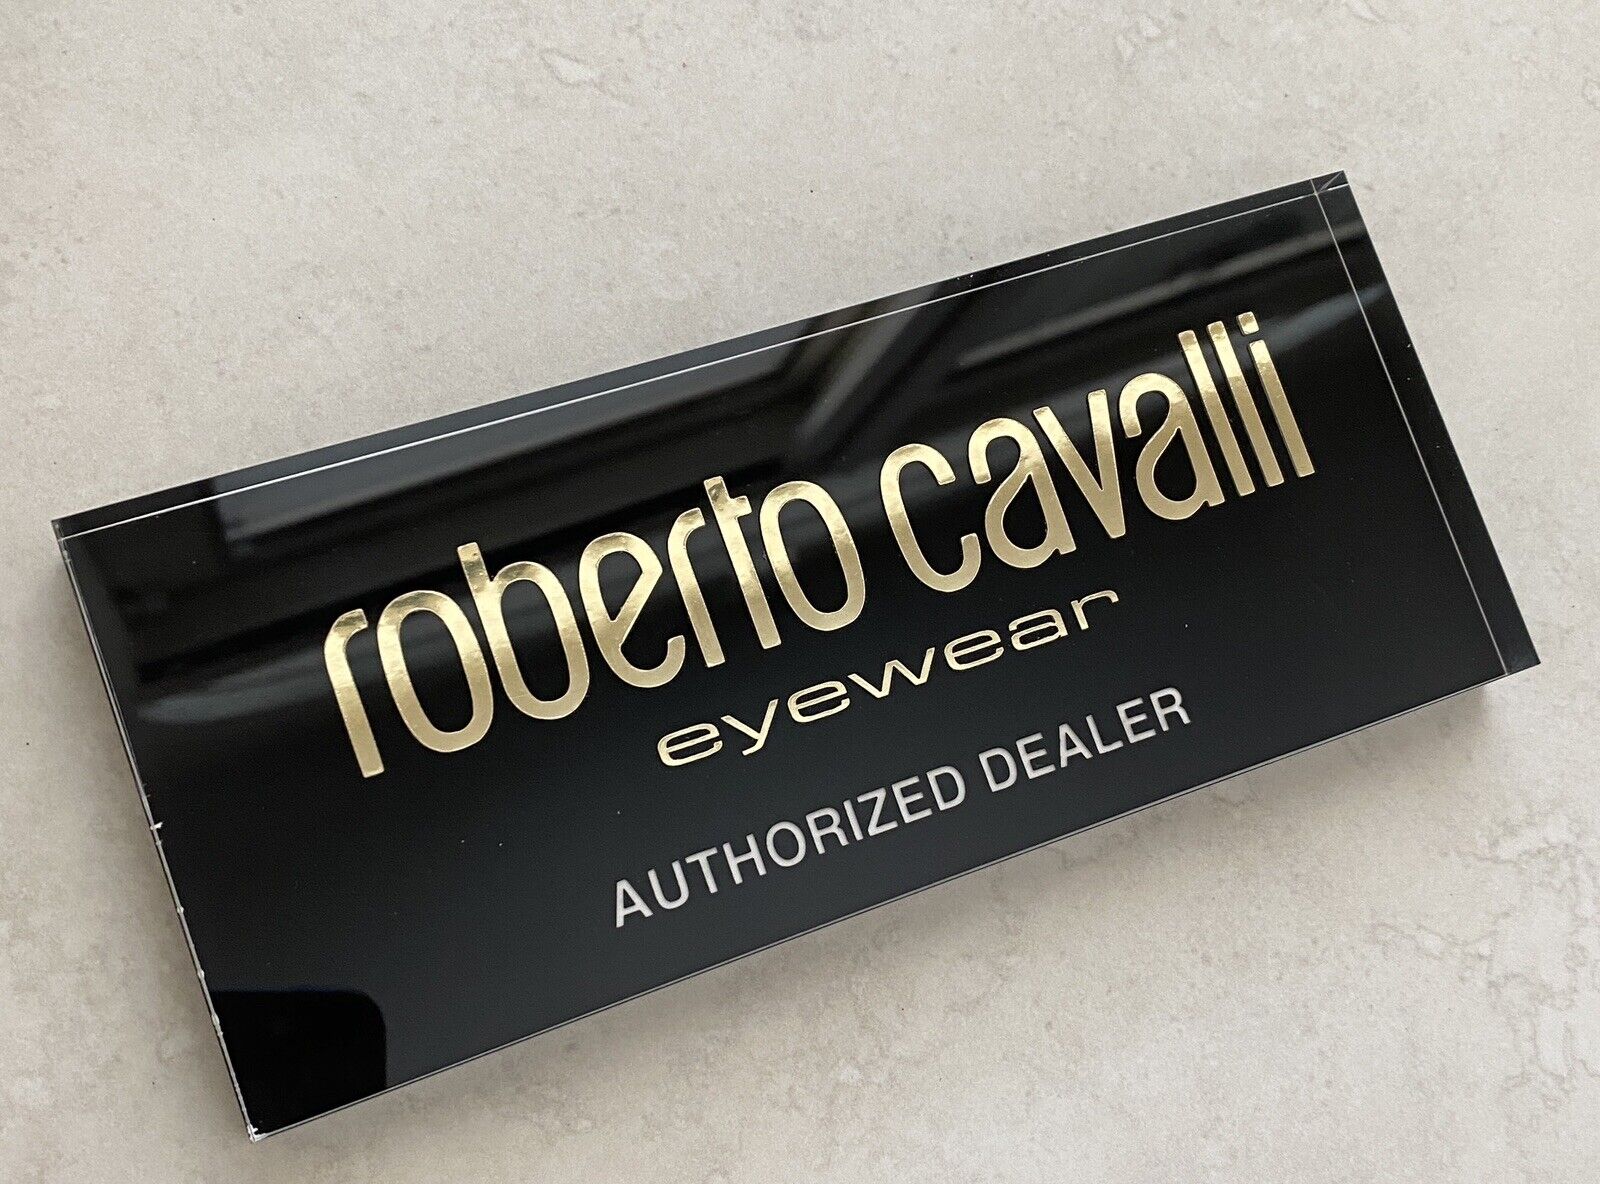 ROBERTO CAVALLI Logo Counter Display Plaque Authorized Dealer NEW AUTHENTIC